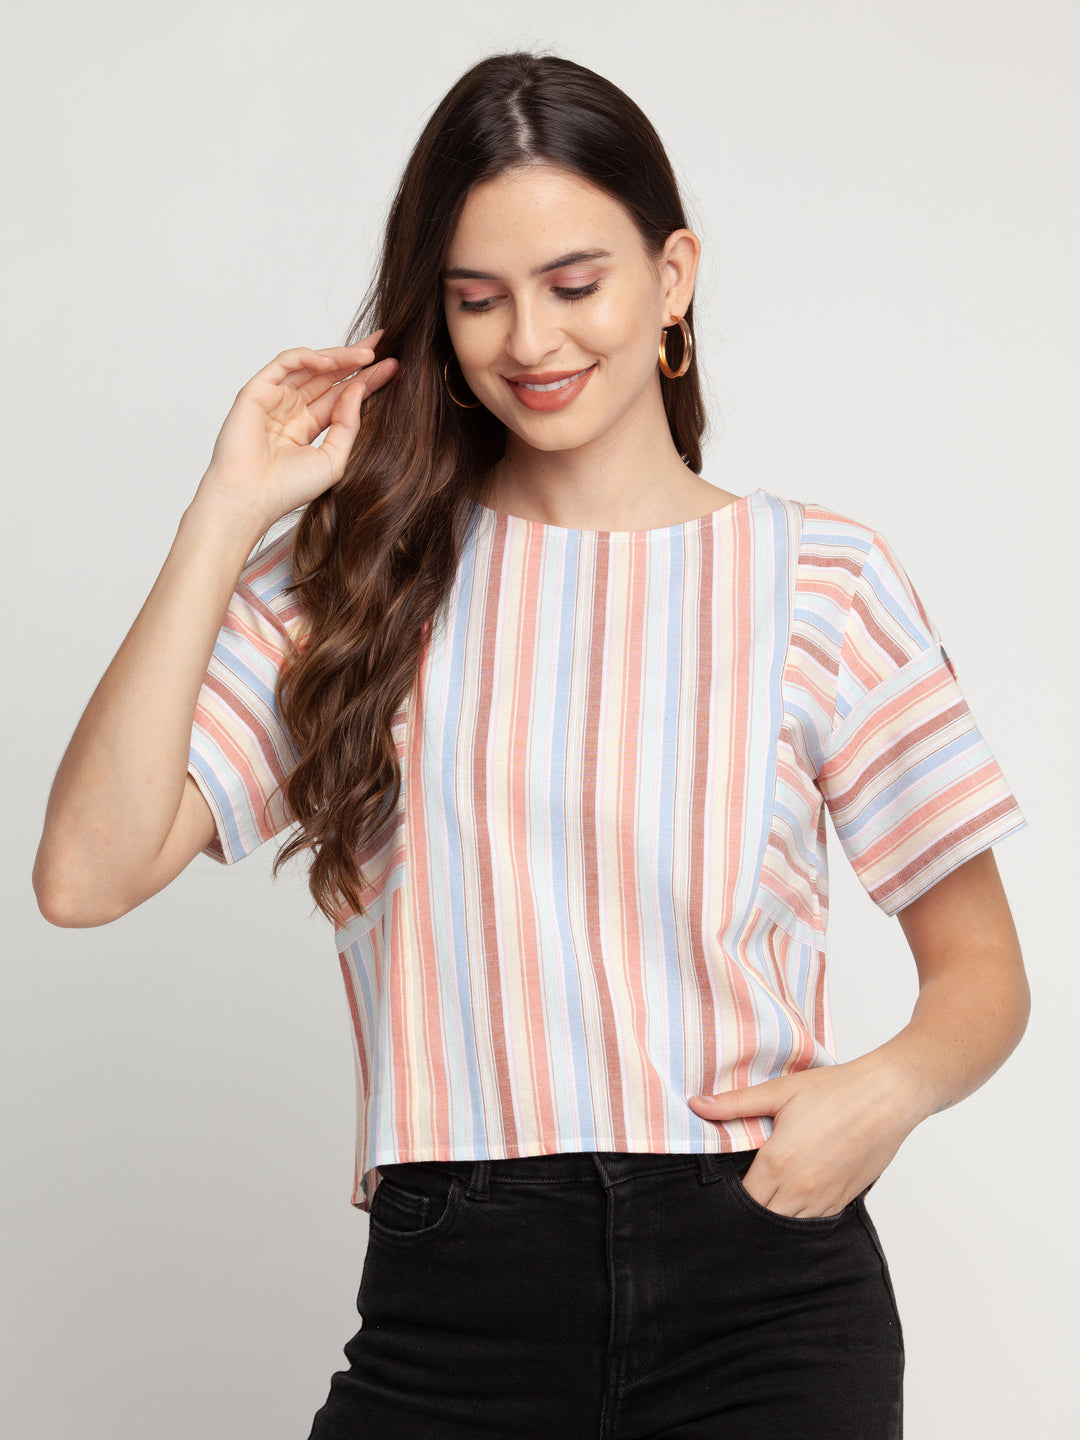 Multicolored Striped Top For Women